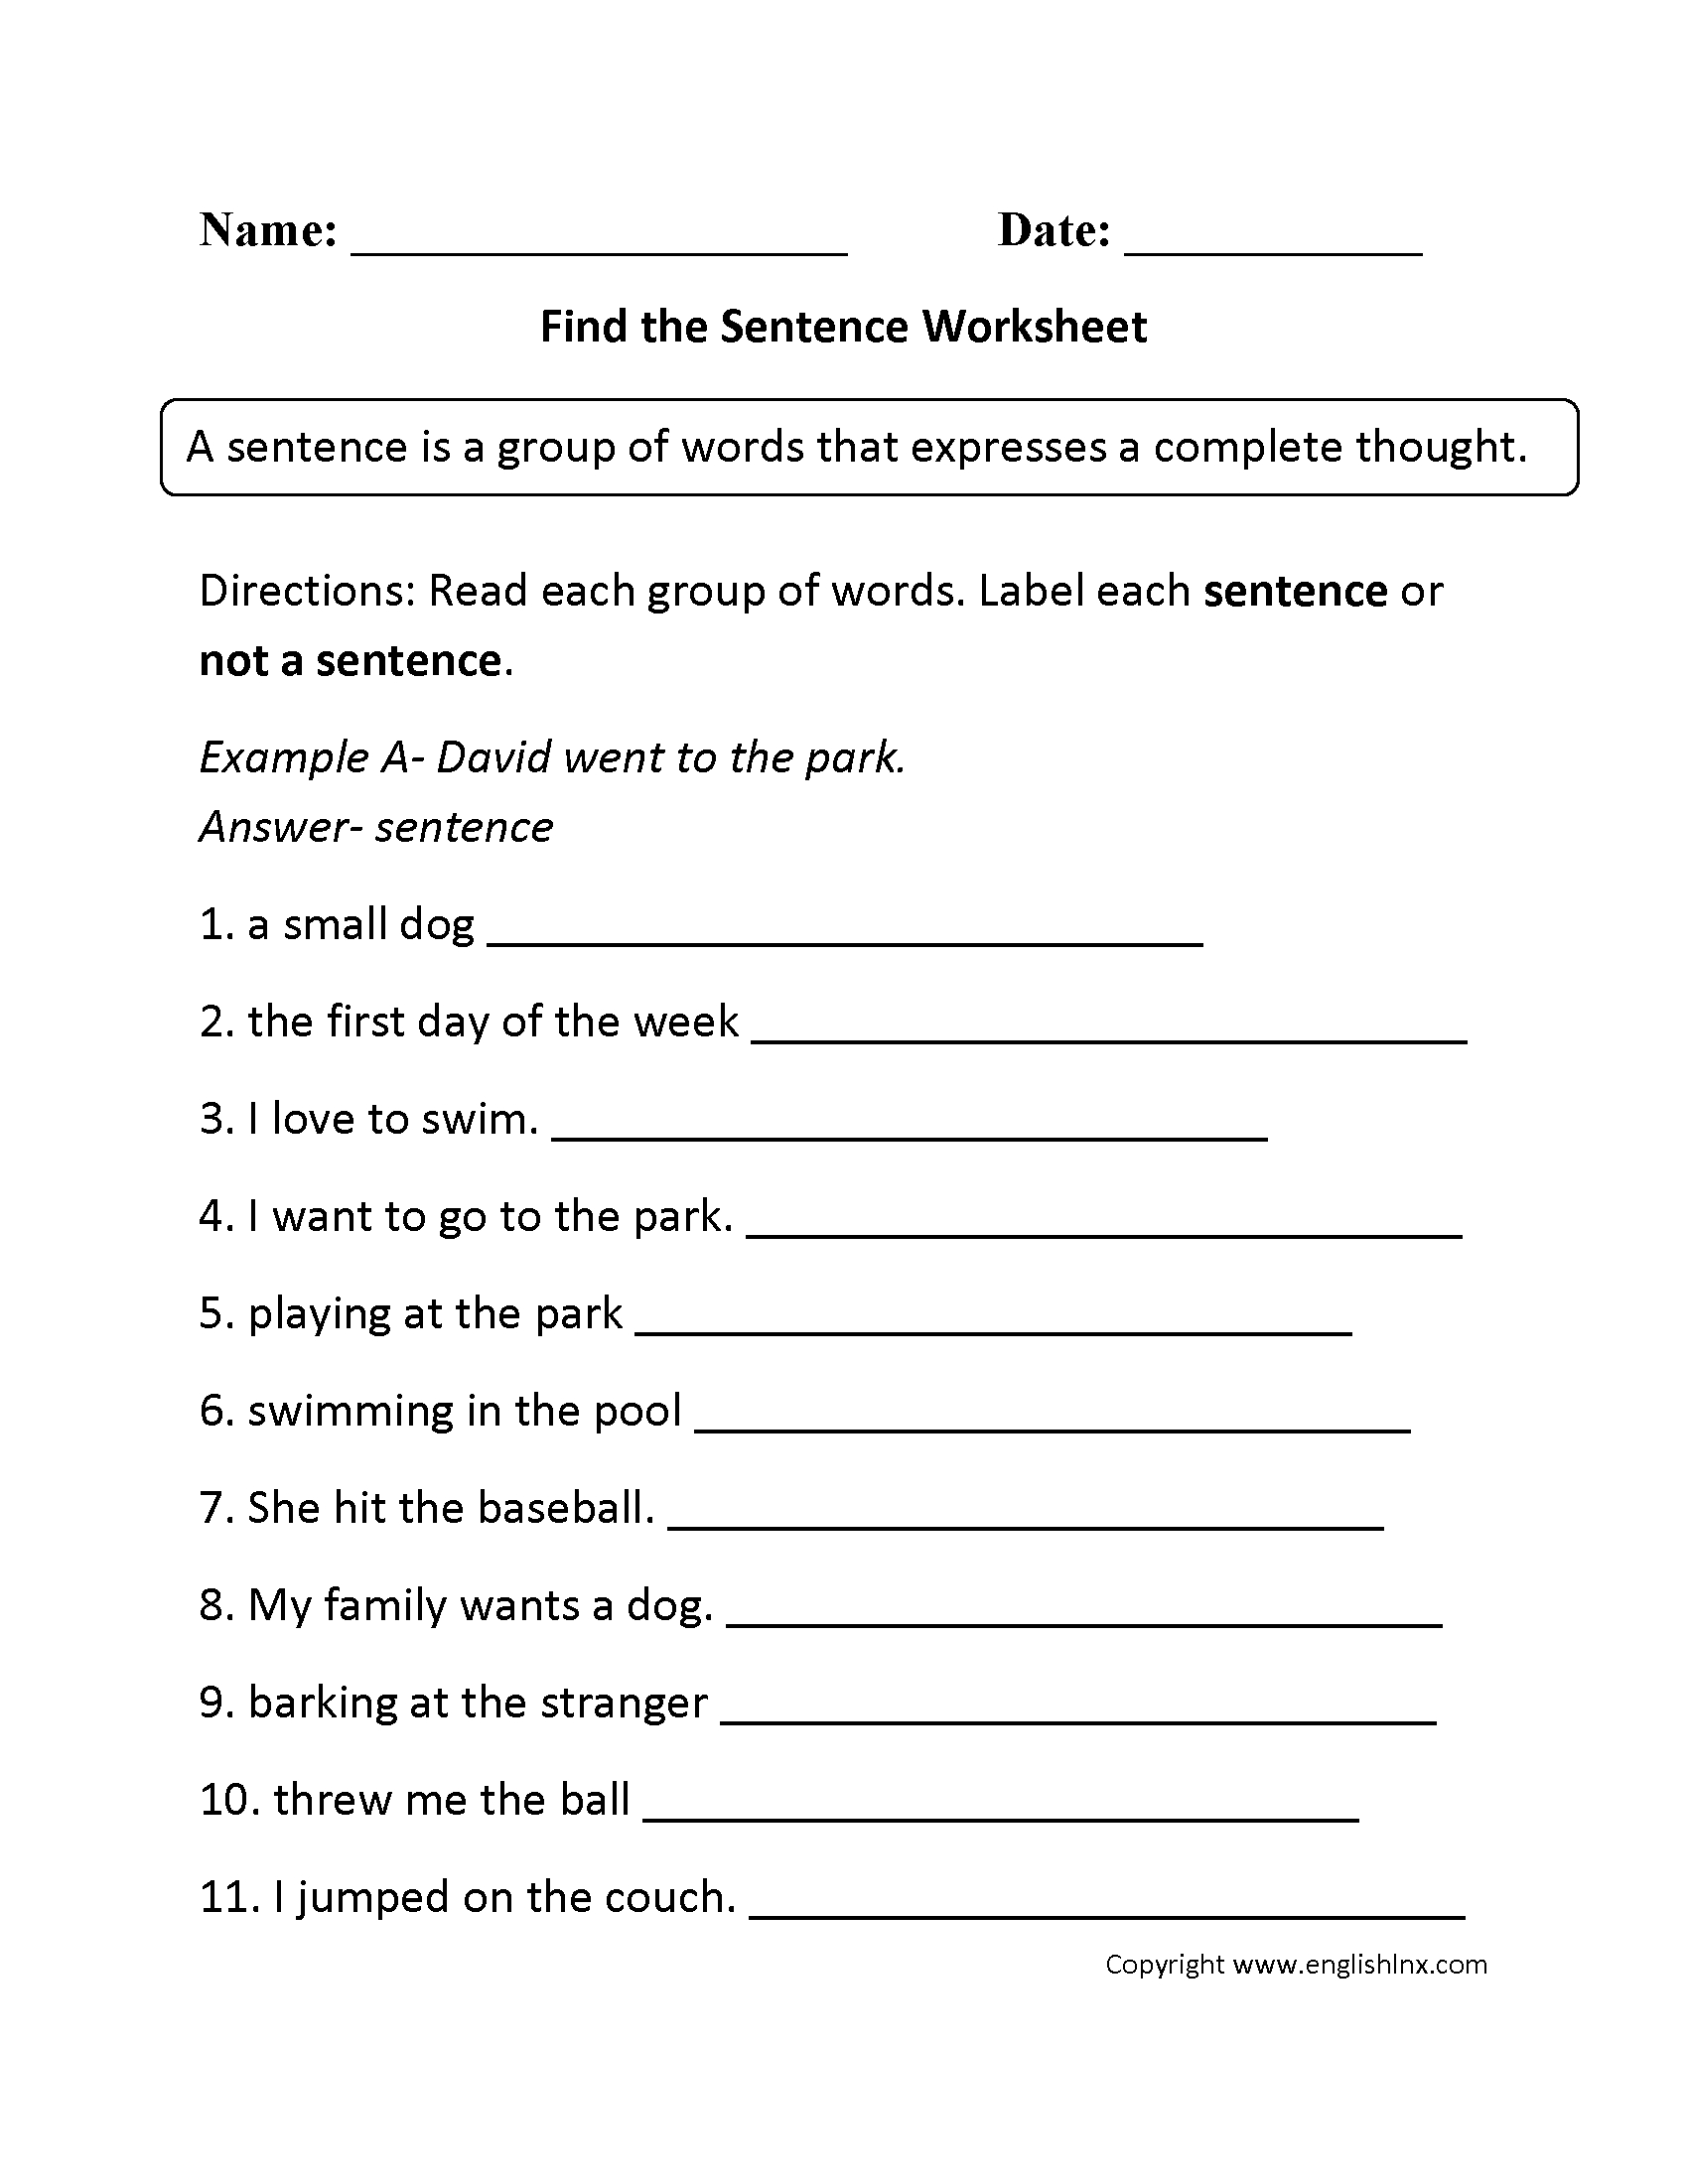 sentence-structure-practice-worksheets